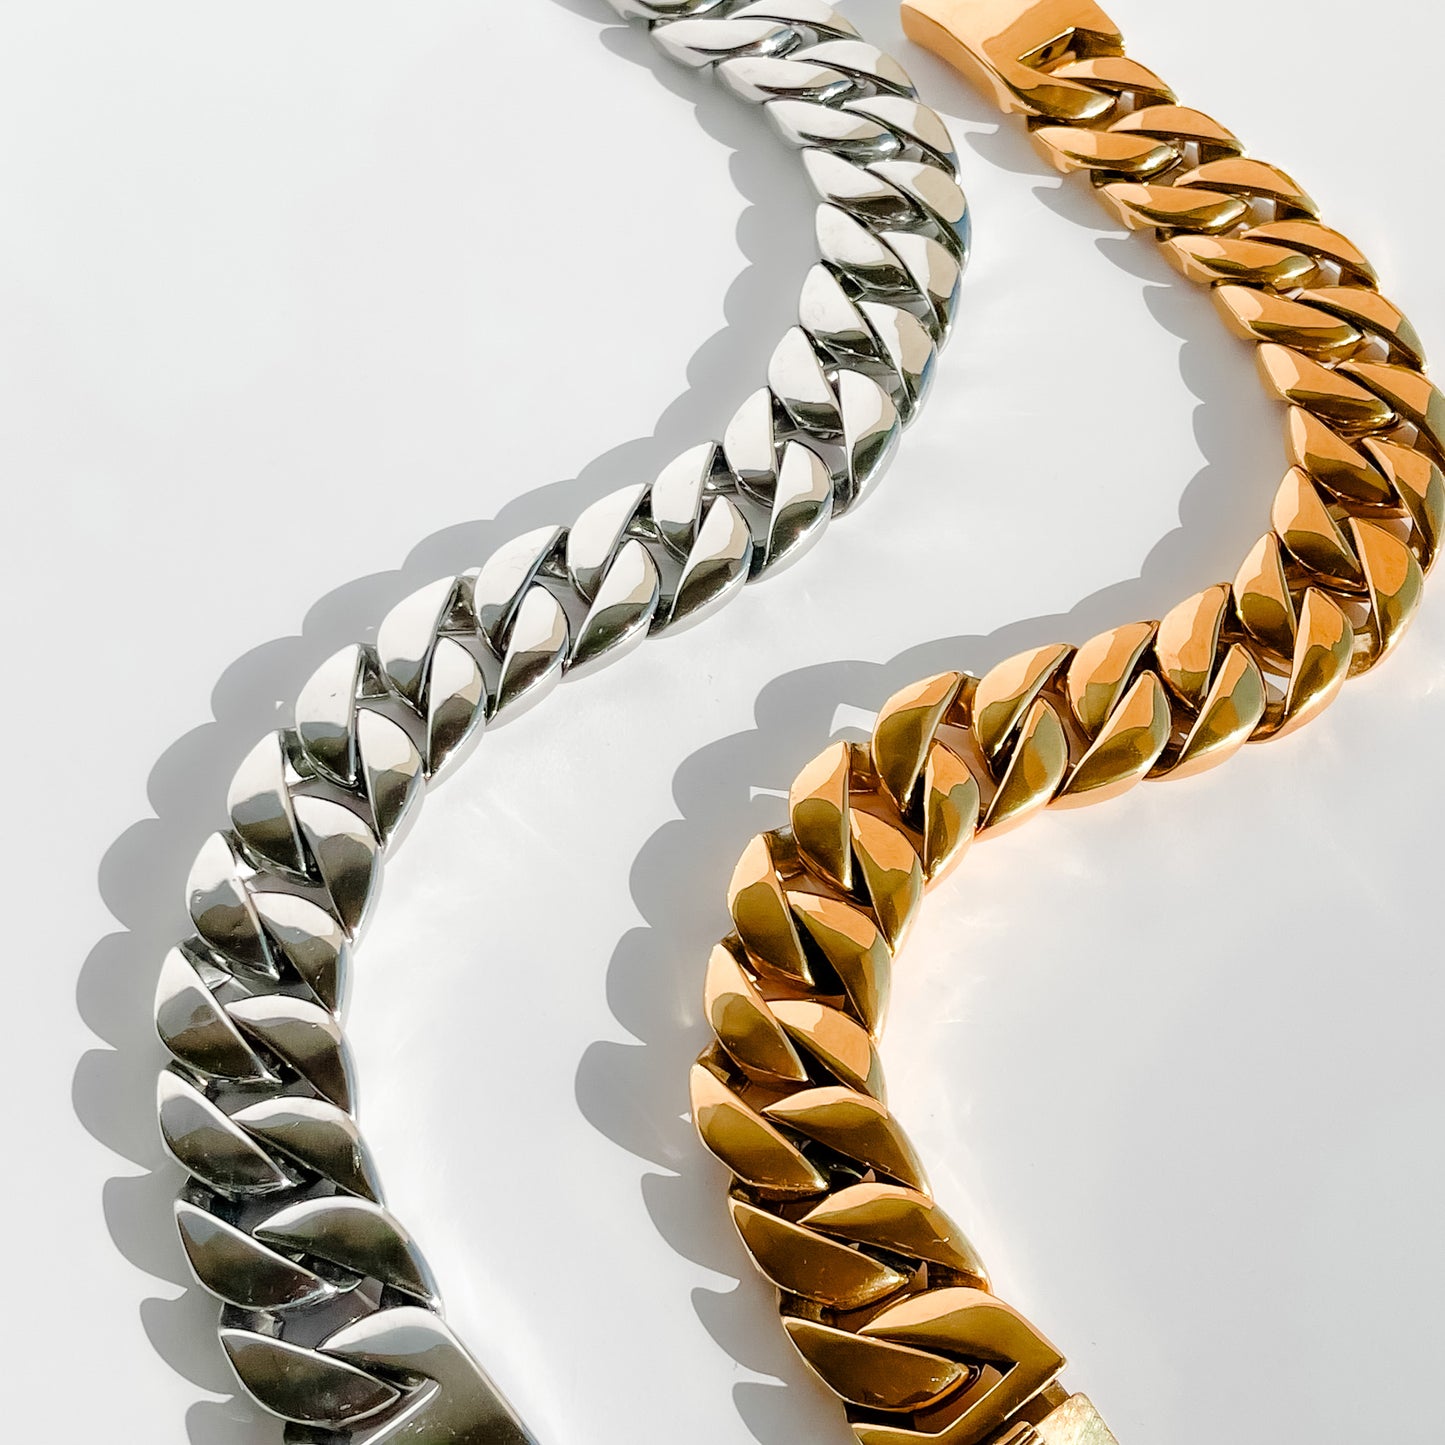 Icon Chain necklace